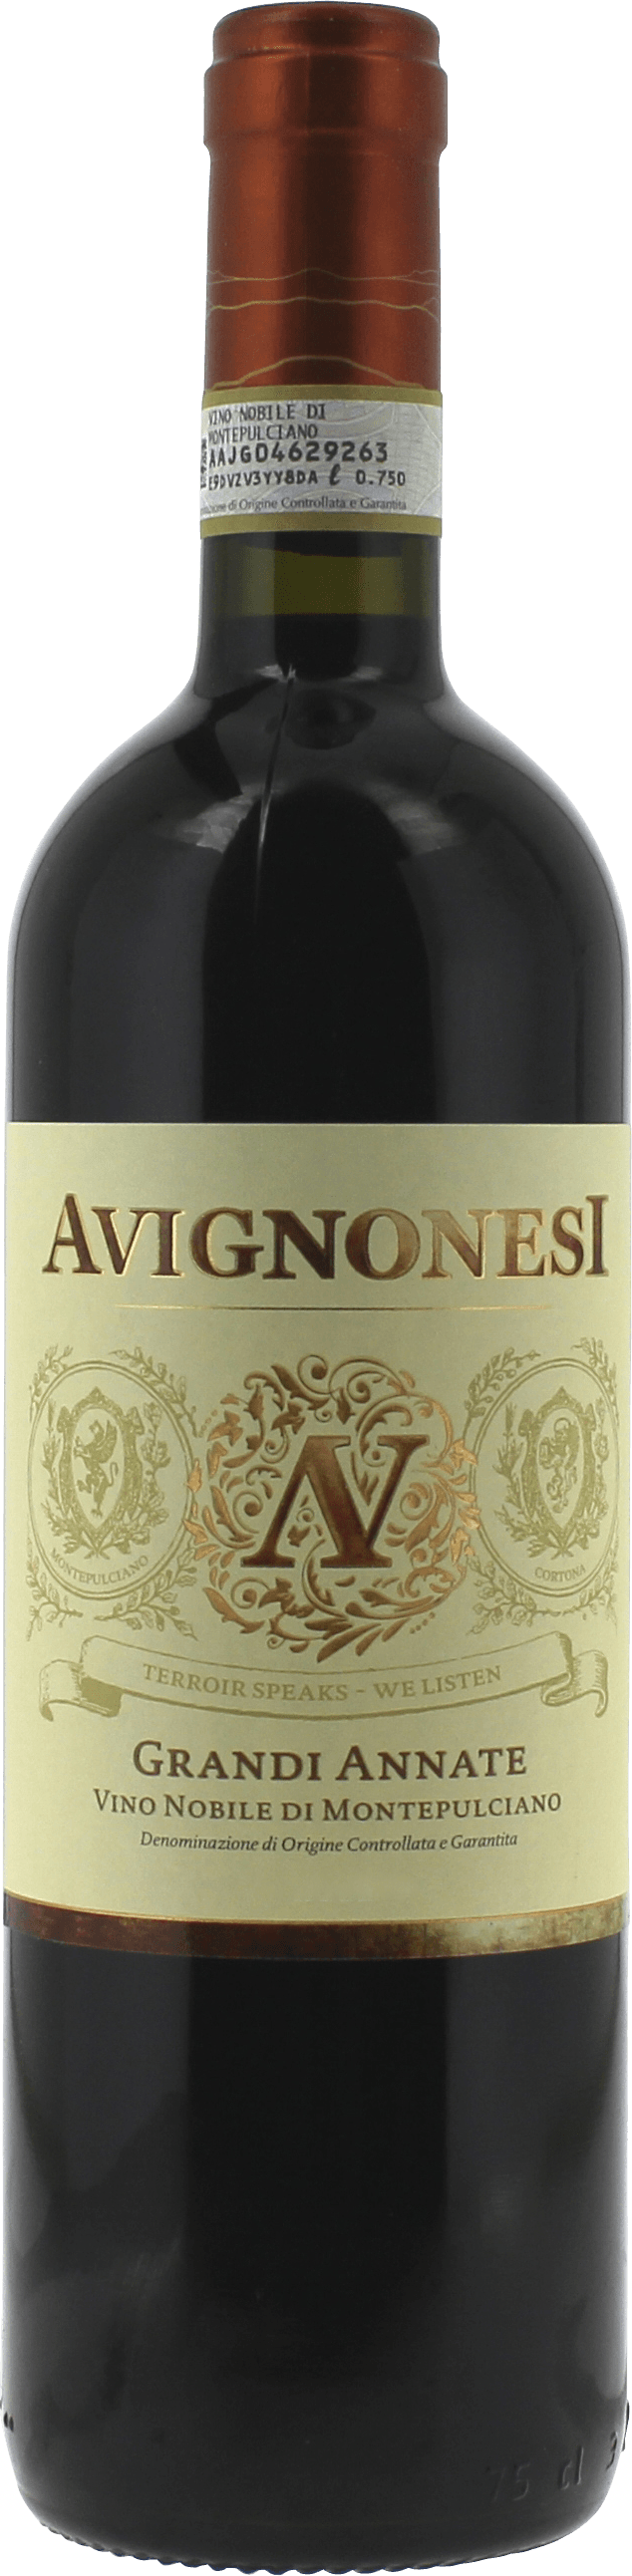 Avignonesi -  grandi annate prugnolo gentile - vino nobile di montepulciano 2012  , Vin italien